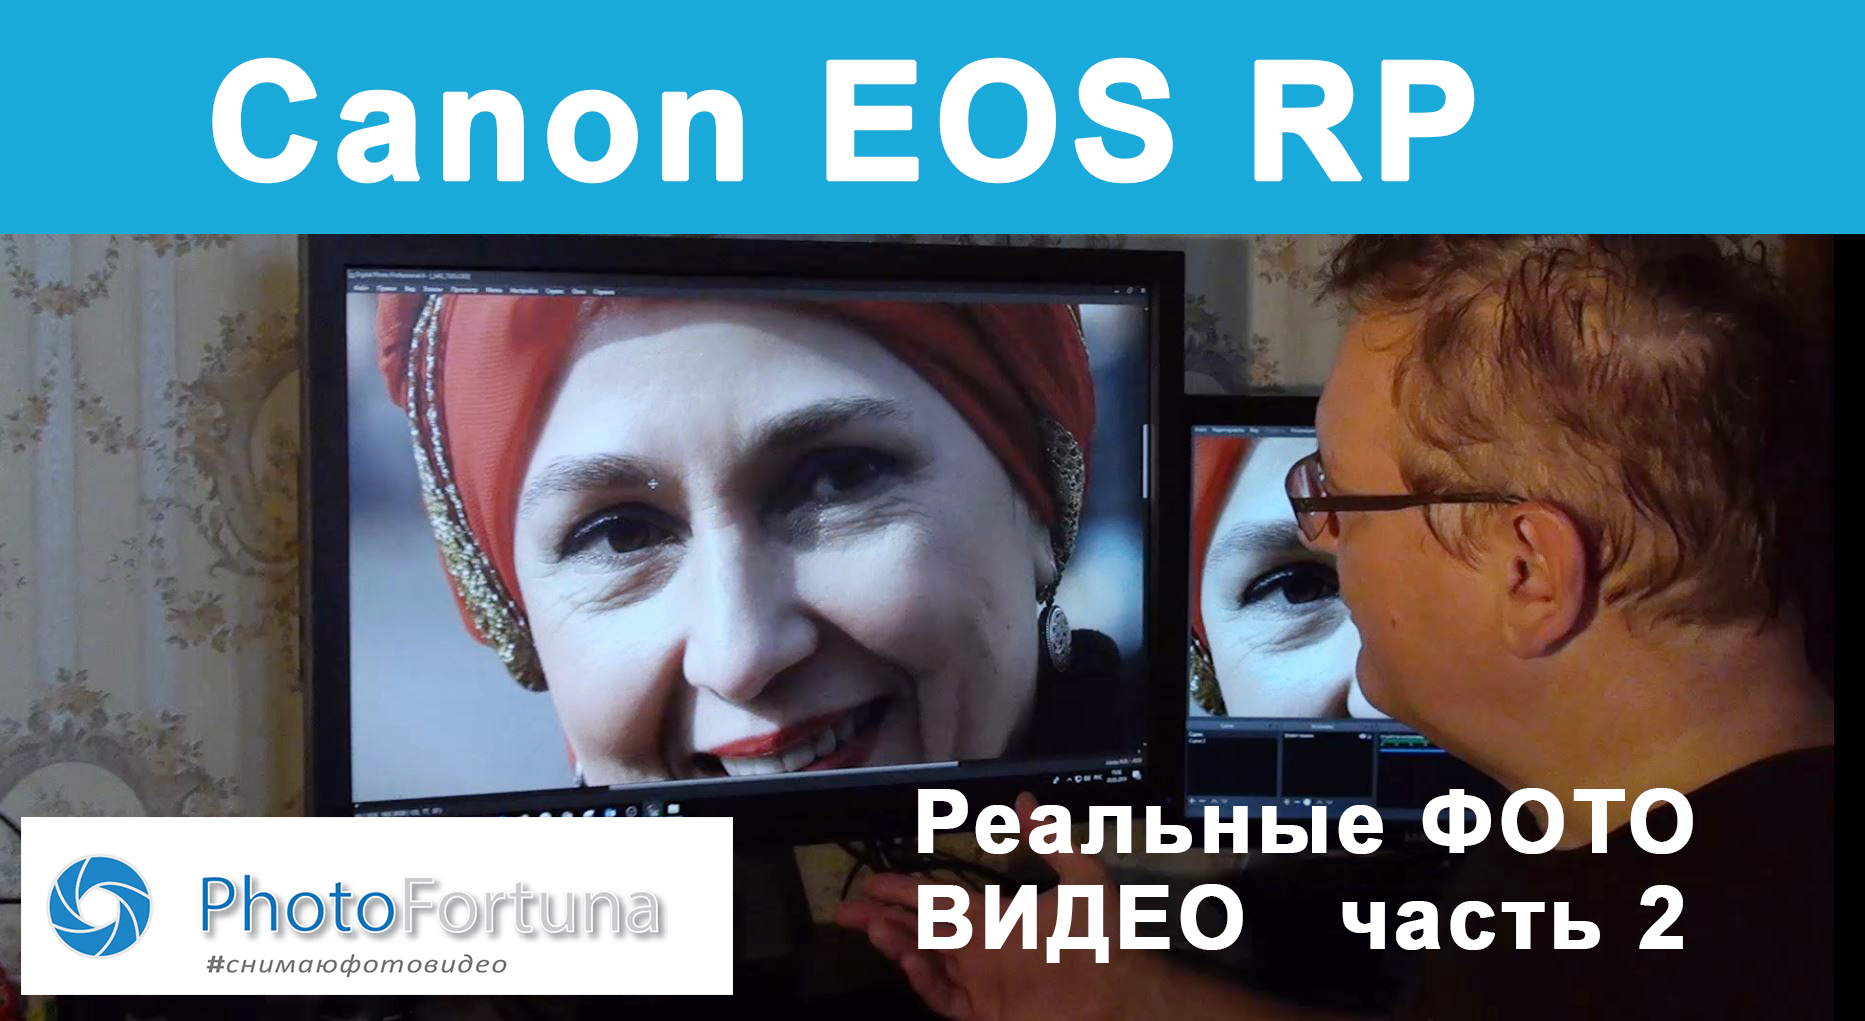 You are currently viewing Реальный уличный Тест Canon EOS RP в Москве